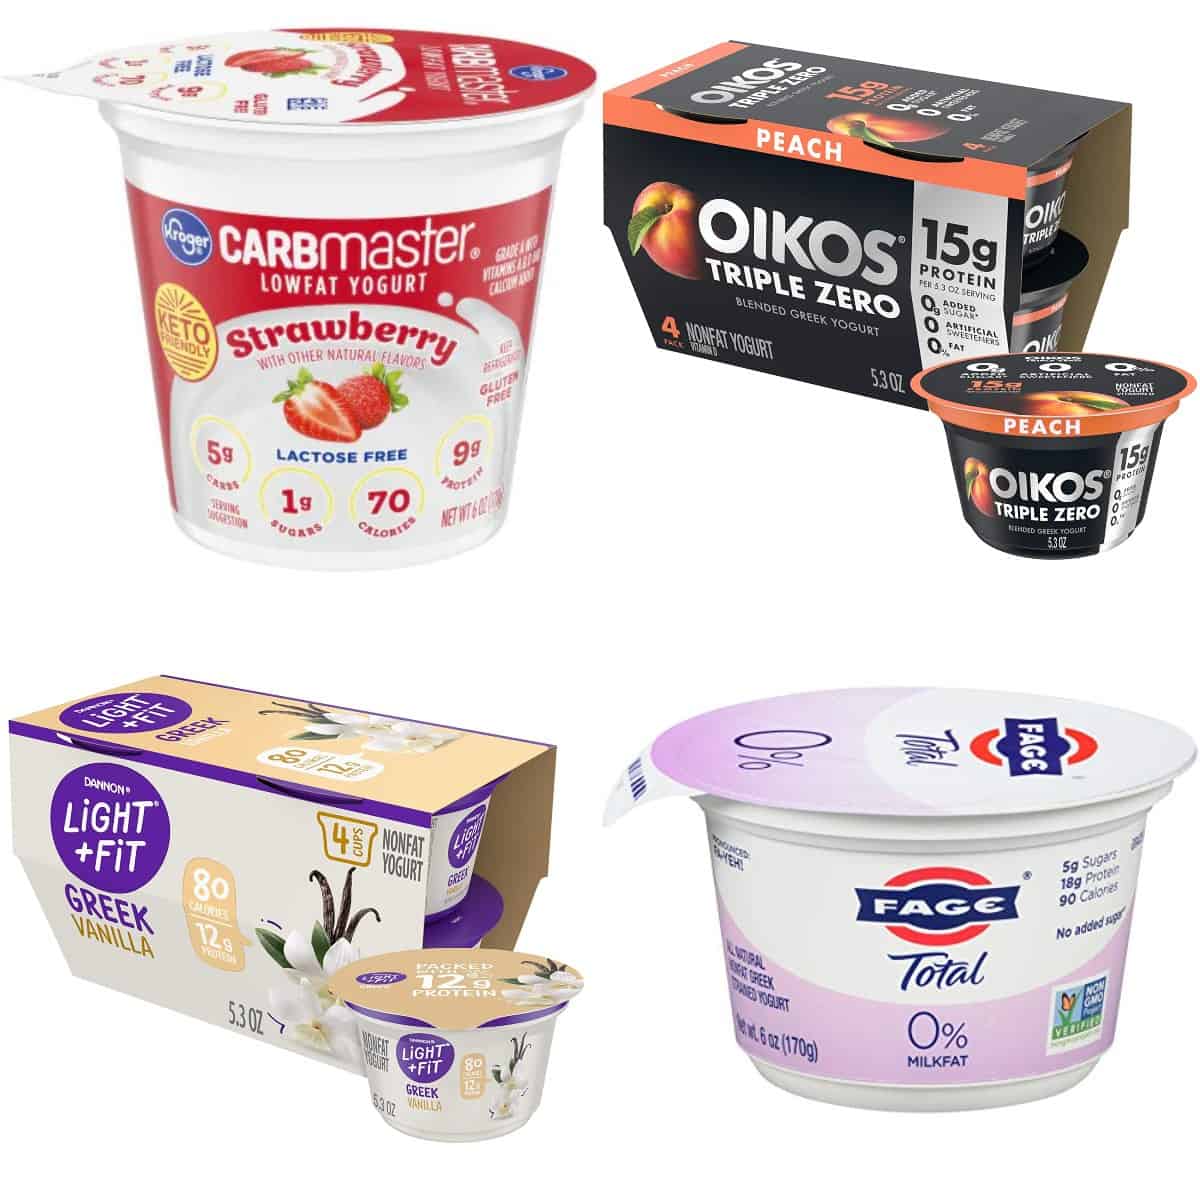 Greek yogurt for low carb diets